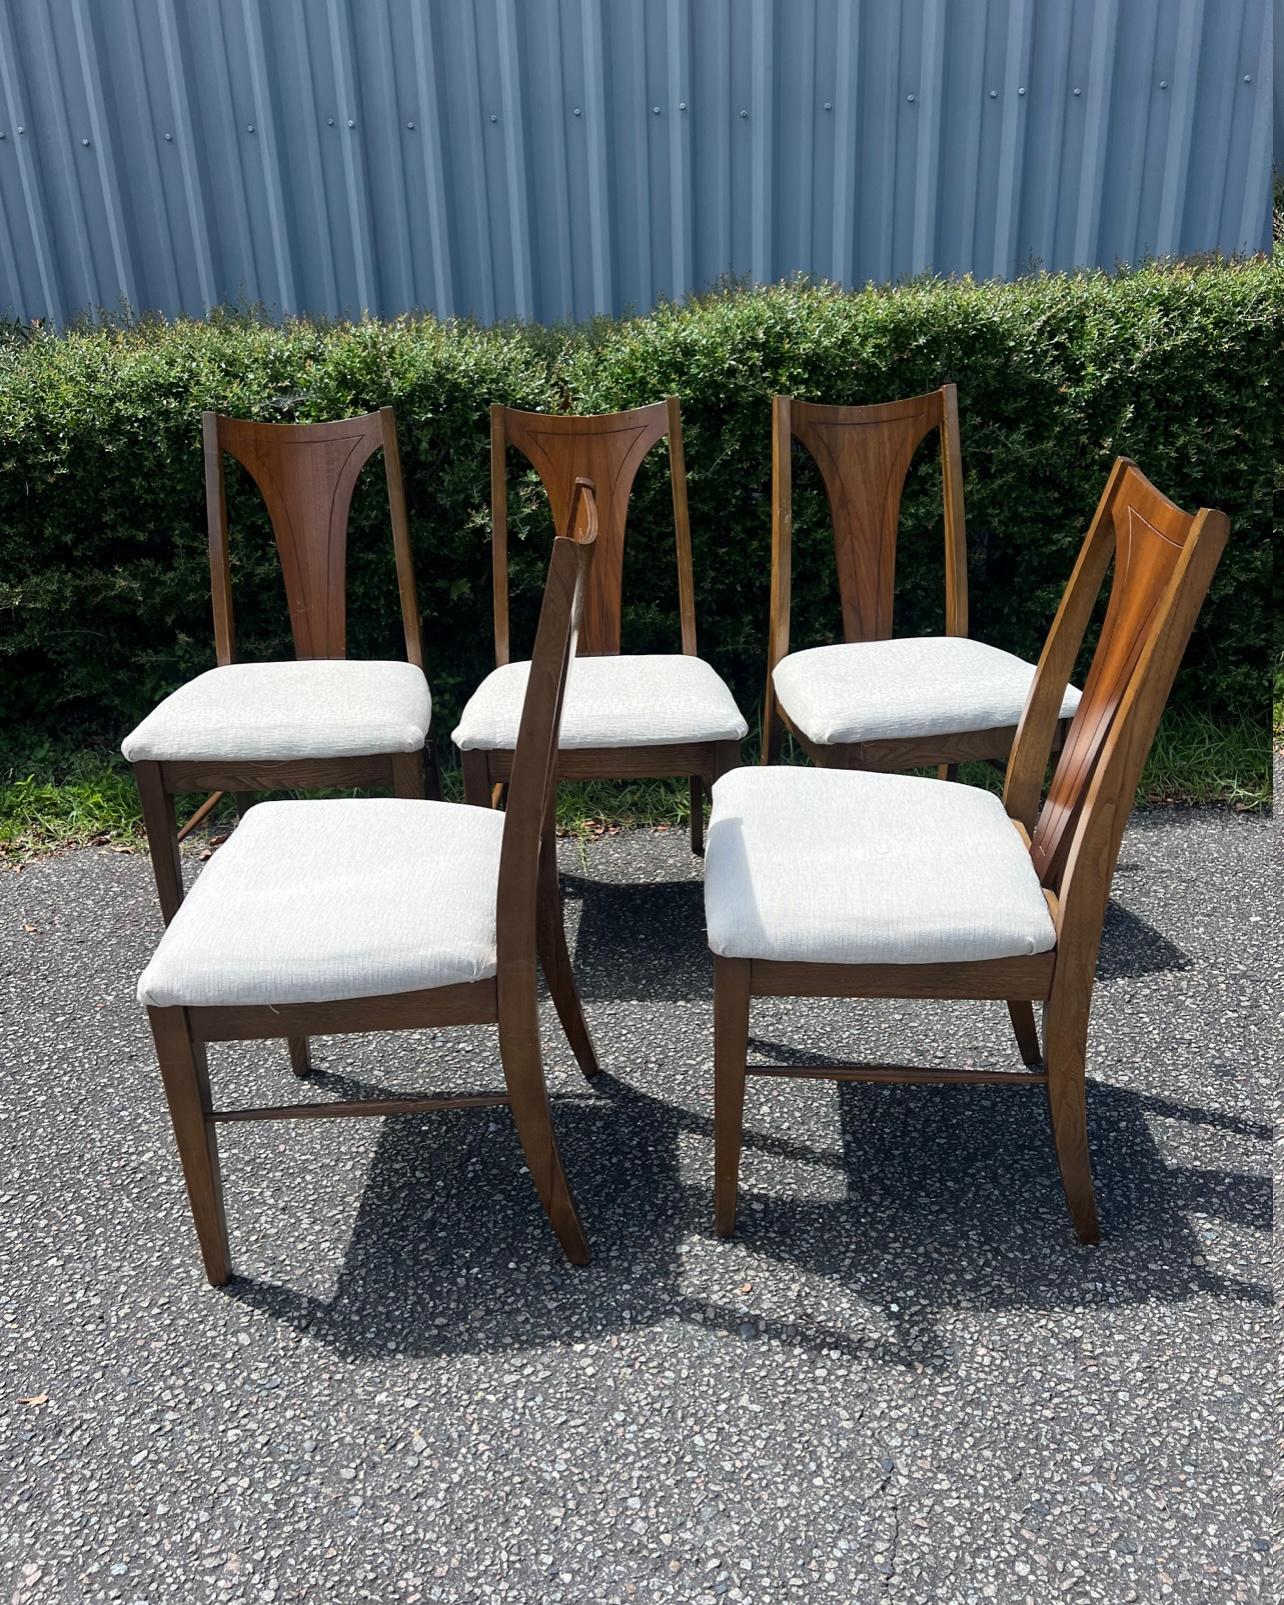 20th Century Mid-Century Modern Broyhill Brasilia Splat Back Dining Side Chairs - Set of 5